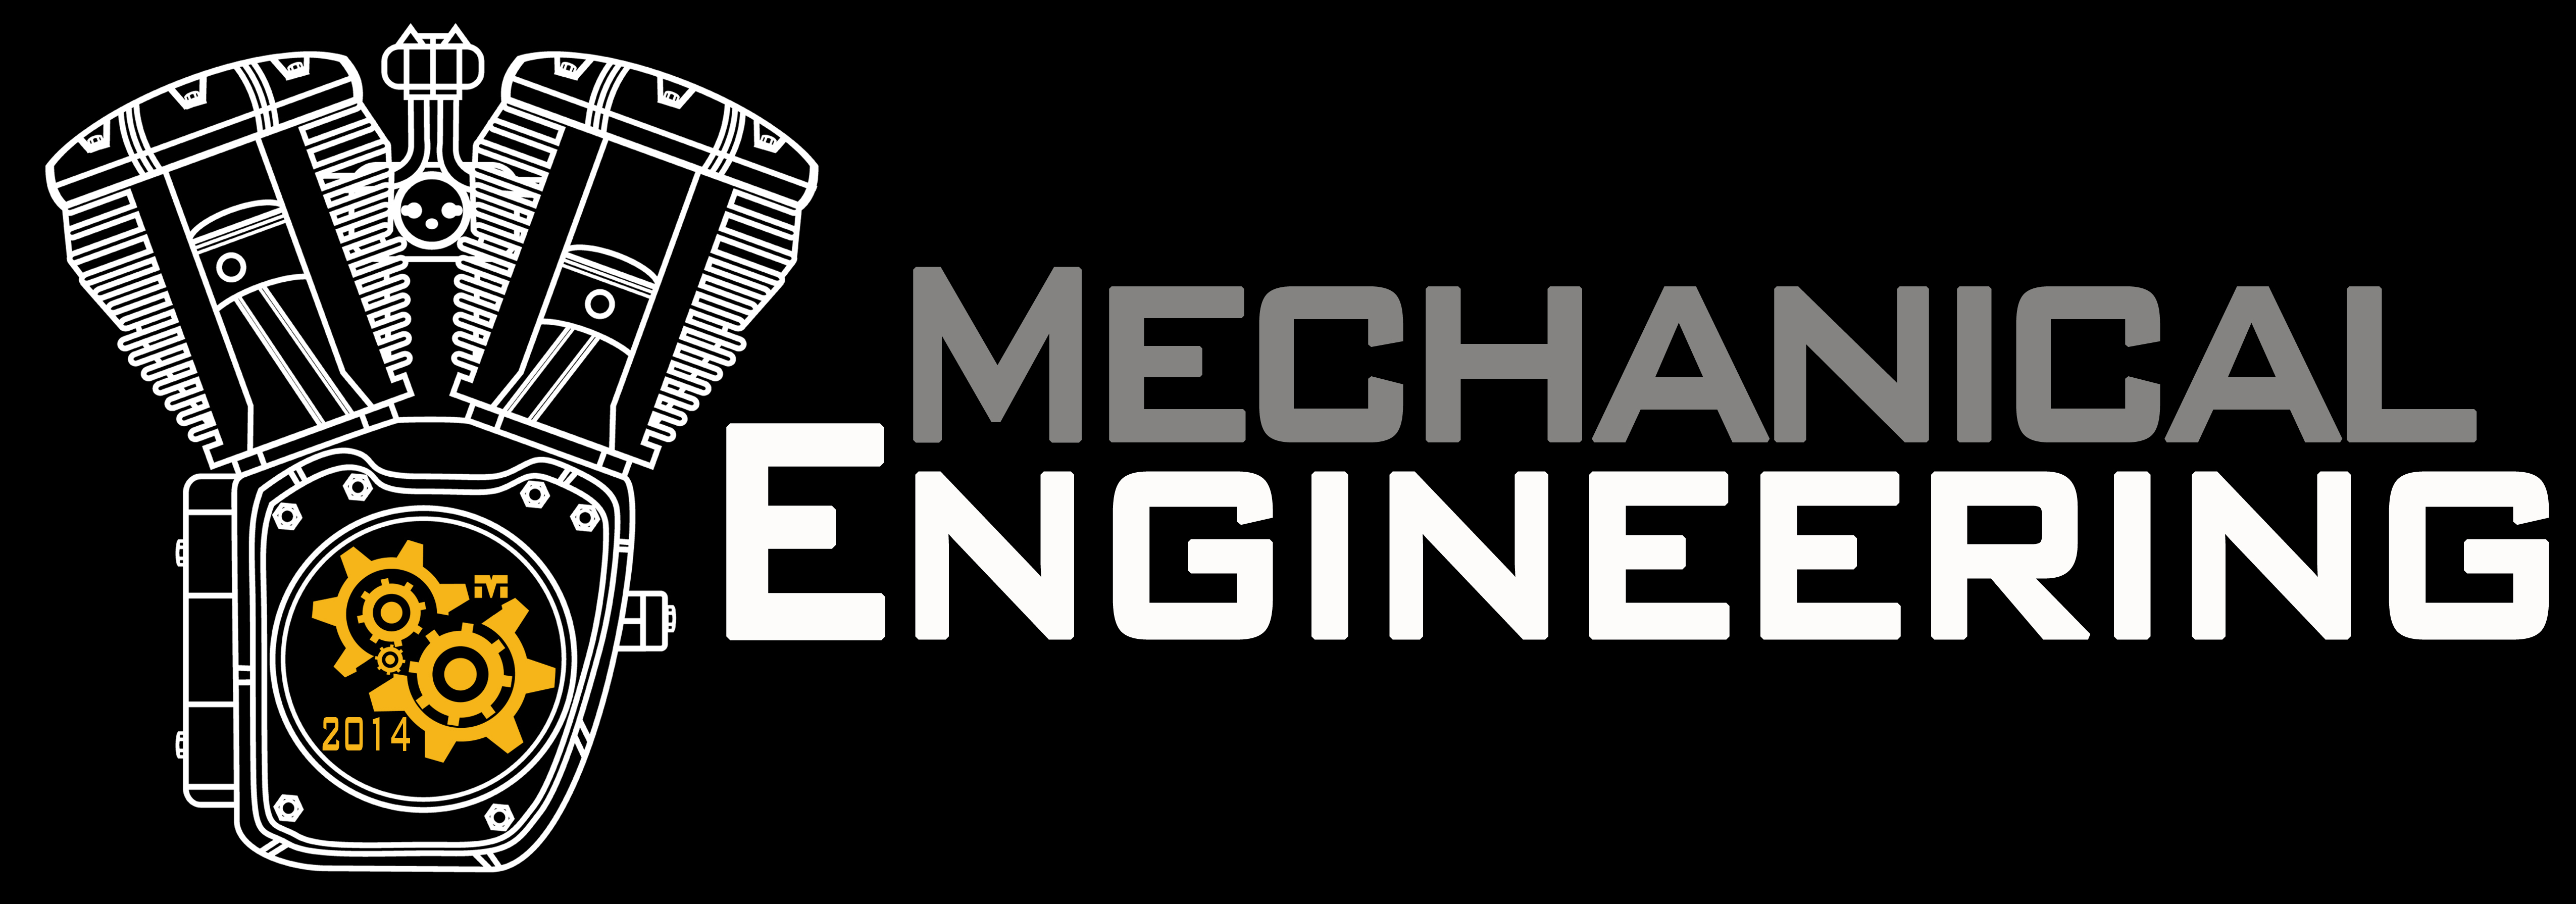 Logo Mechanical Engineering Unsrat 2014 by alfasantoso on ...